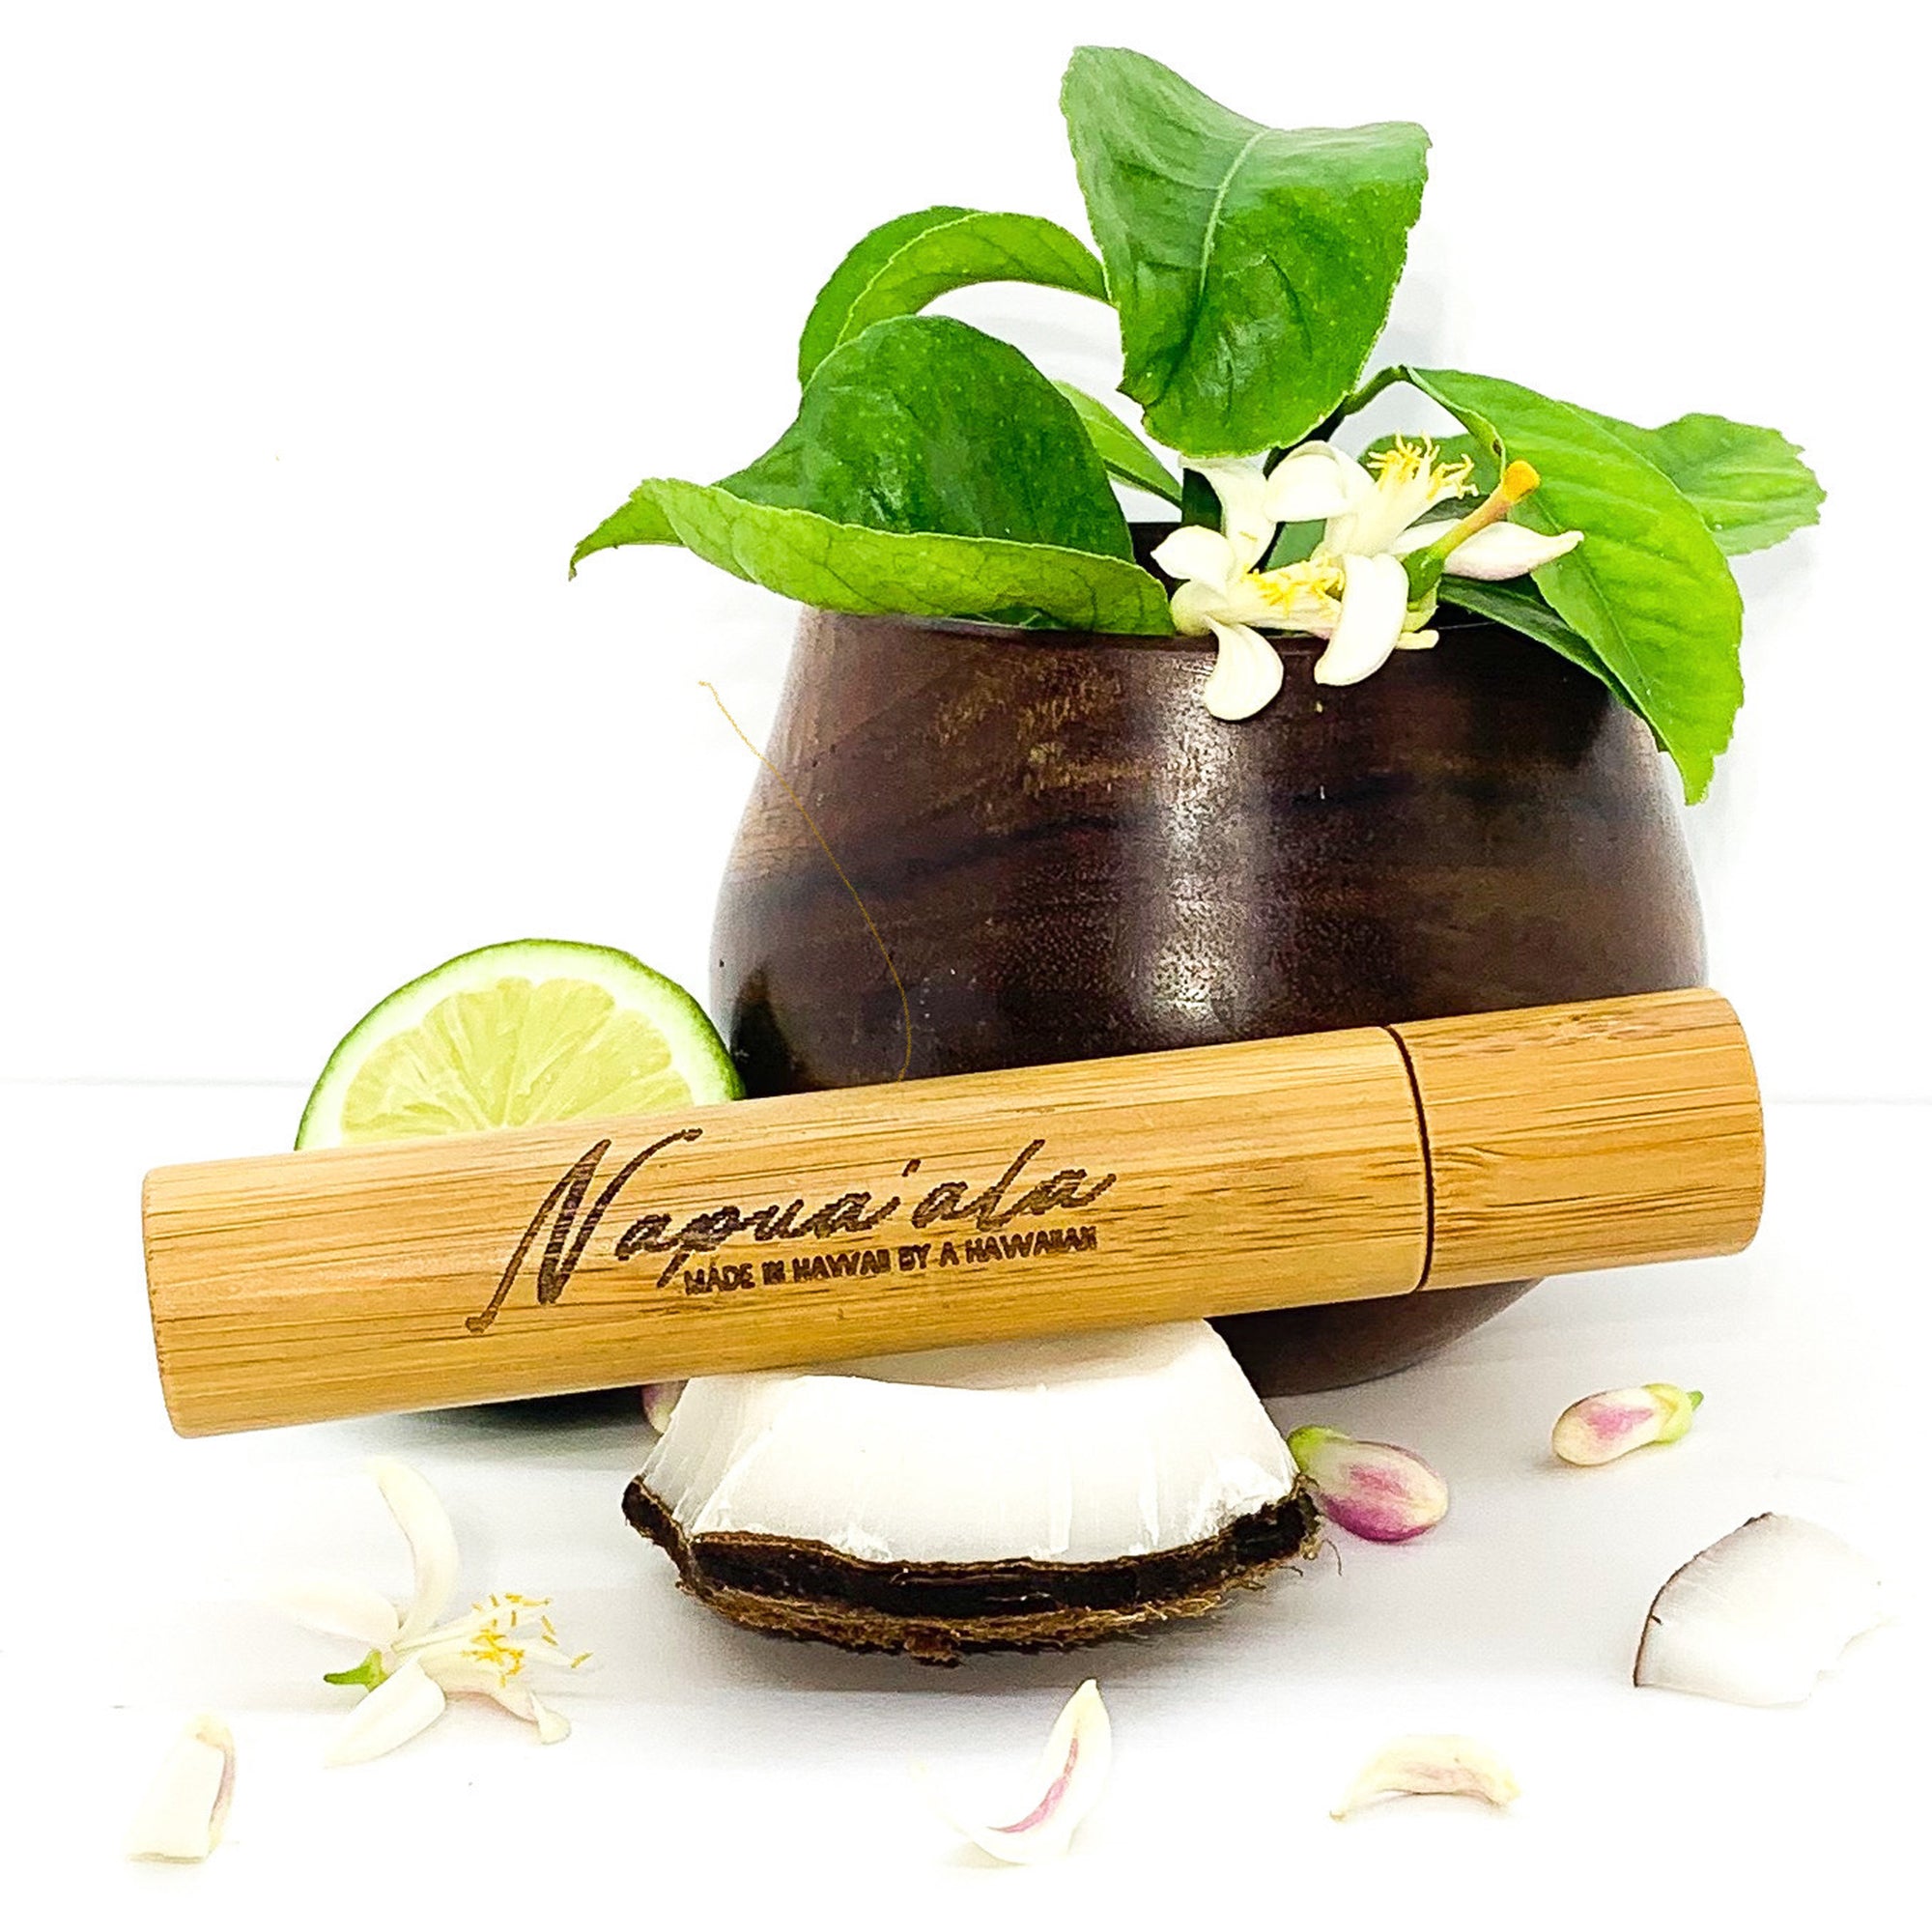 Pop-Up Mākeke - Napua'ala - Coconut Verbena Bamboo Perfume Roll-On